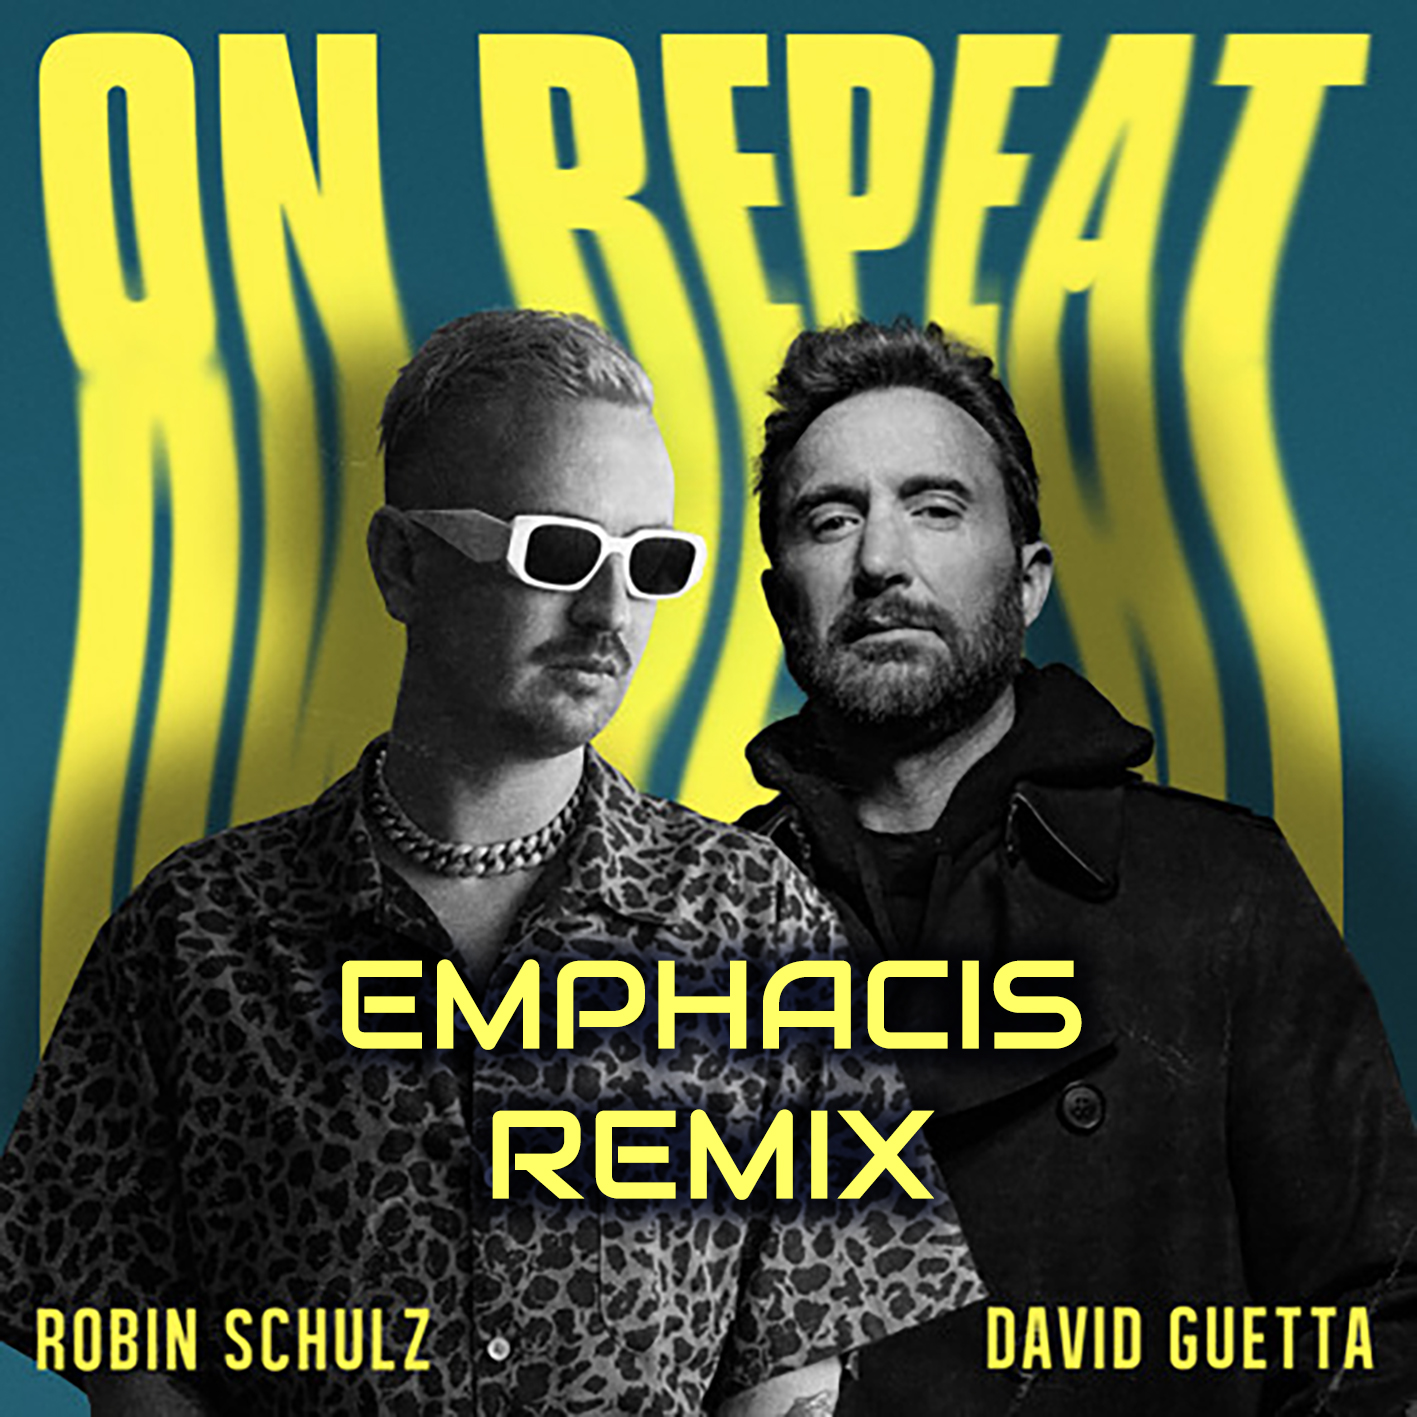 Robin Schulz & David Guetta - On Repeat (Emphacis Remix)